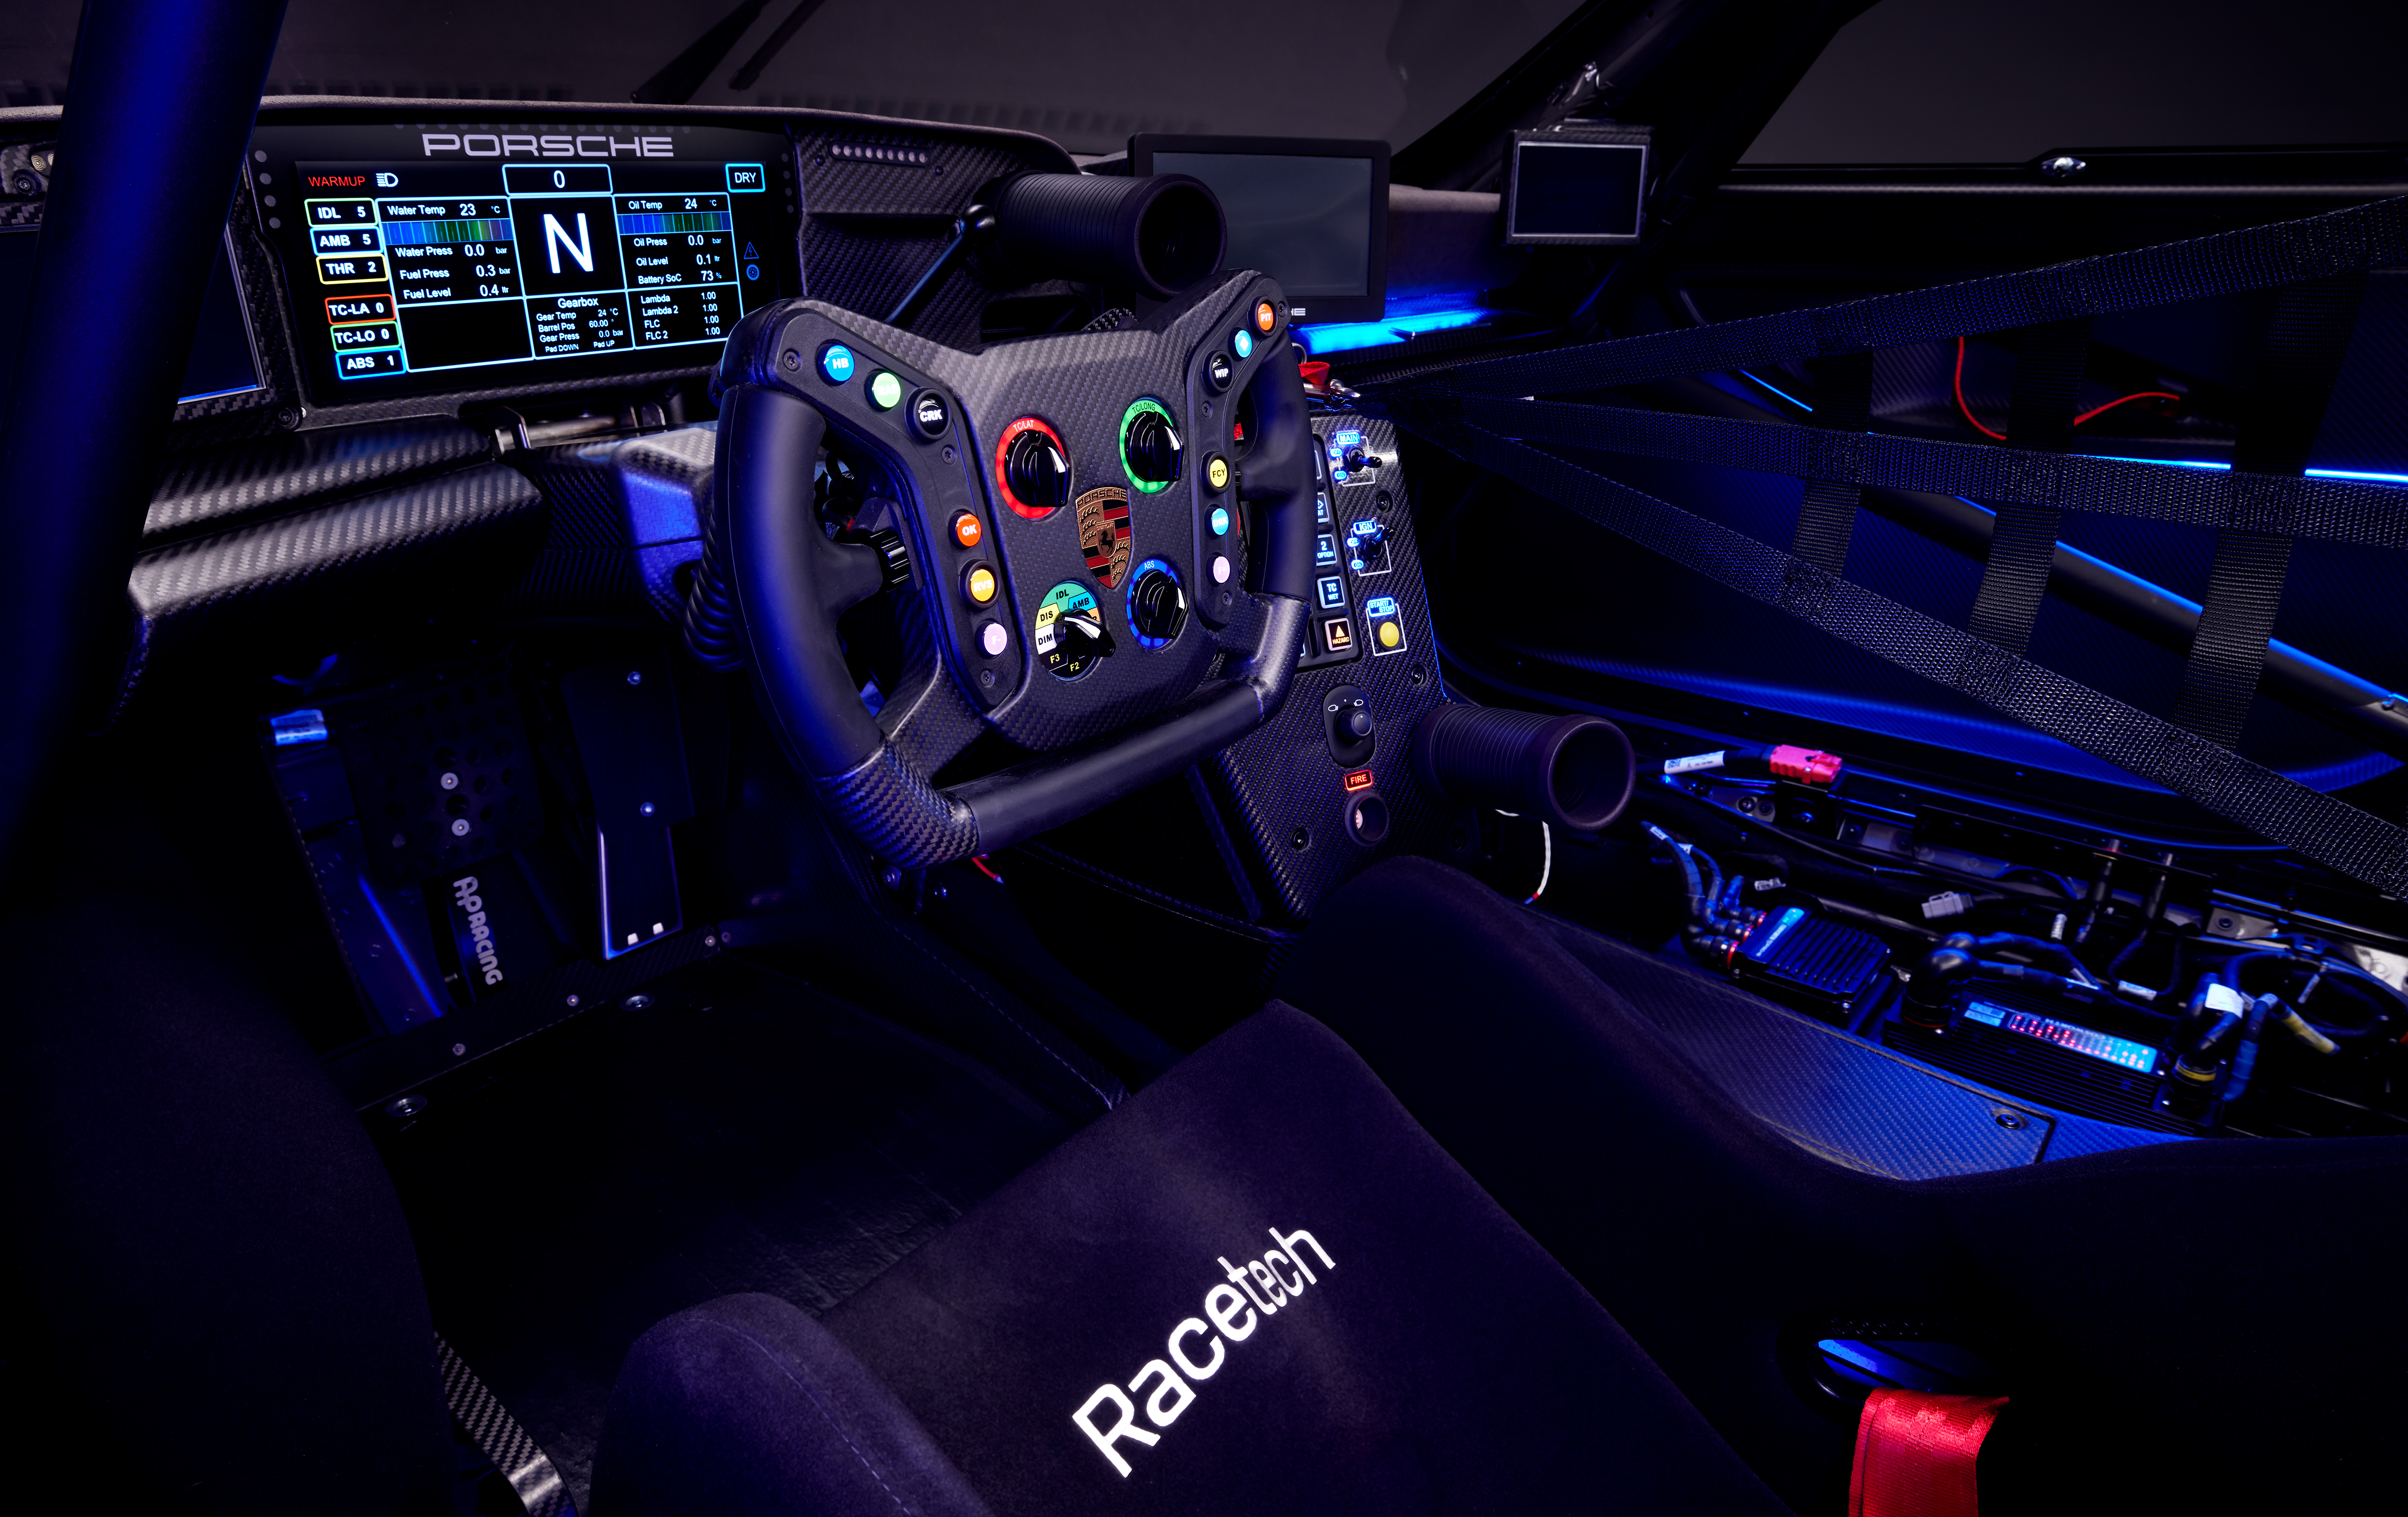 Porsche GT3 R rennsport interior, featuring dashboard and RaceTech seat